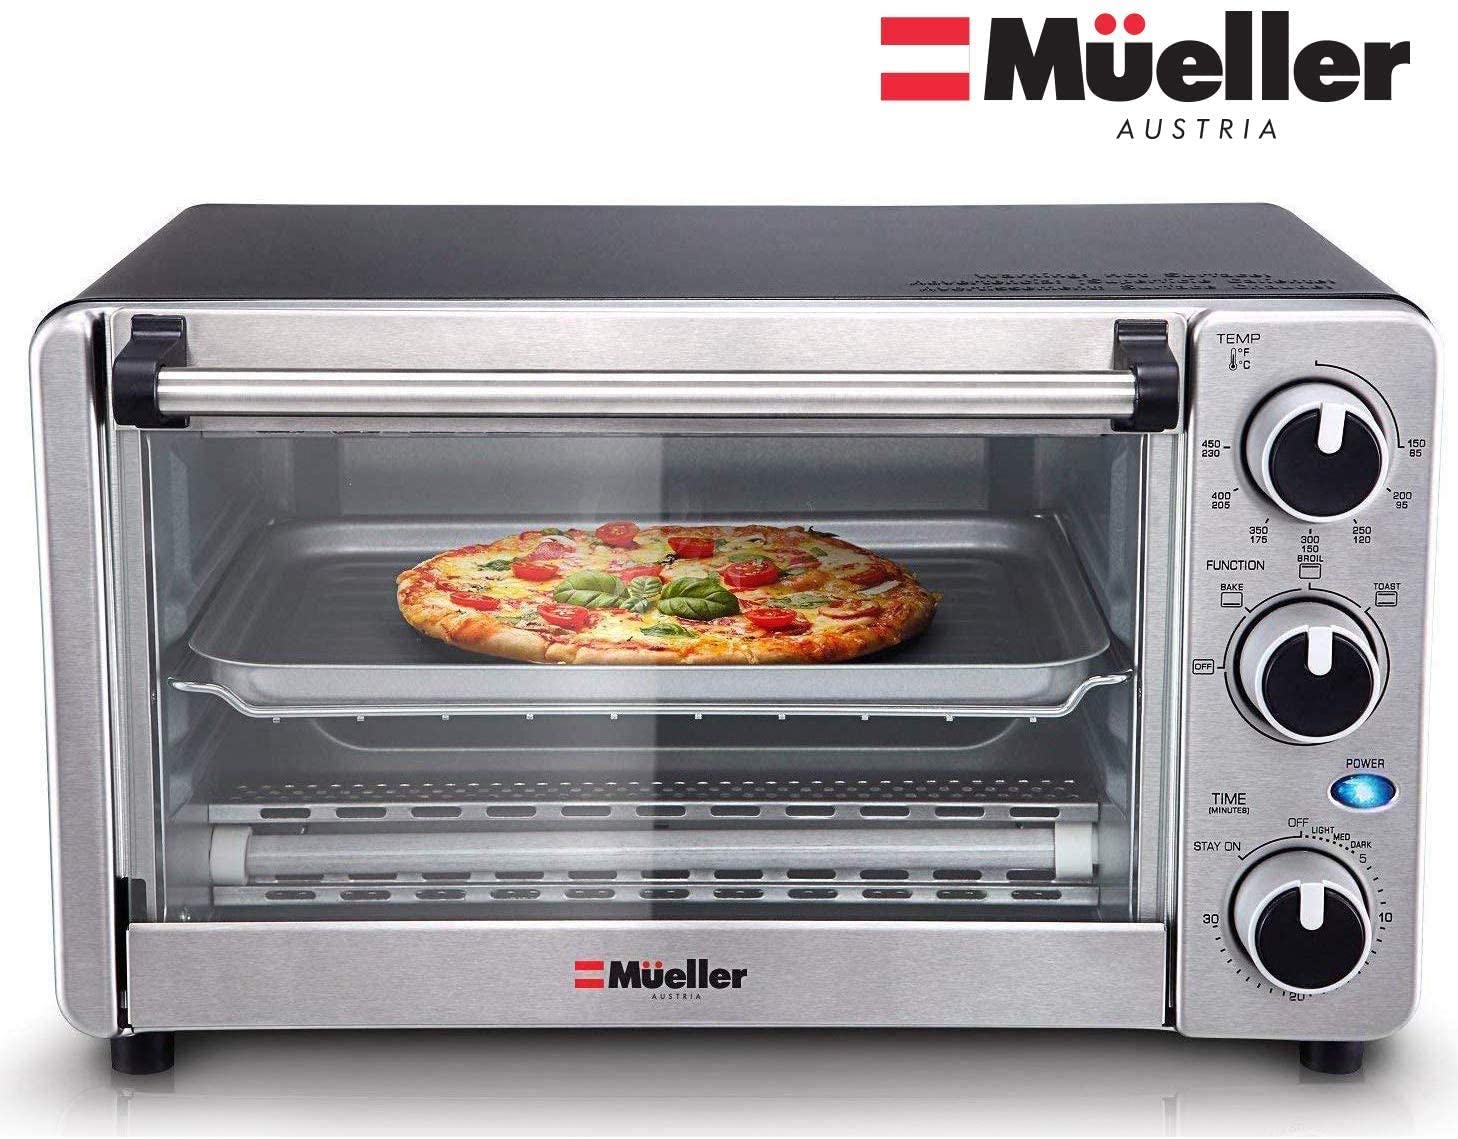 Mueller Austria Multi-Function Stainless Steel Countertop Toaster Oven